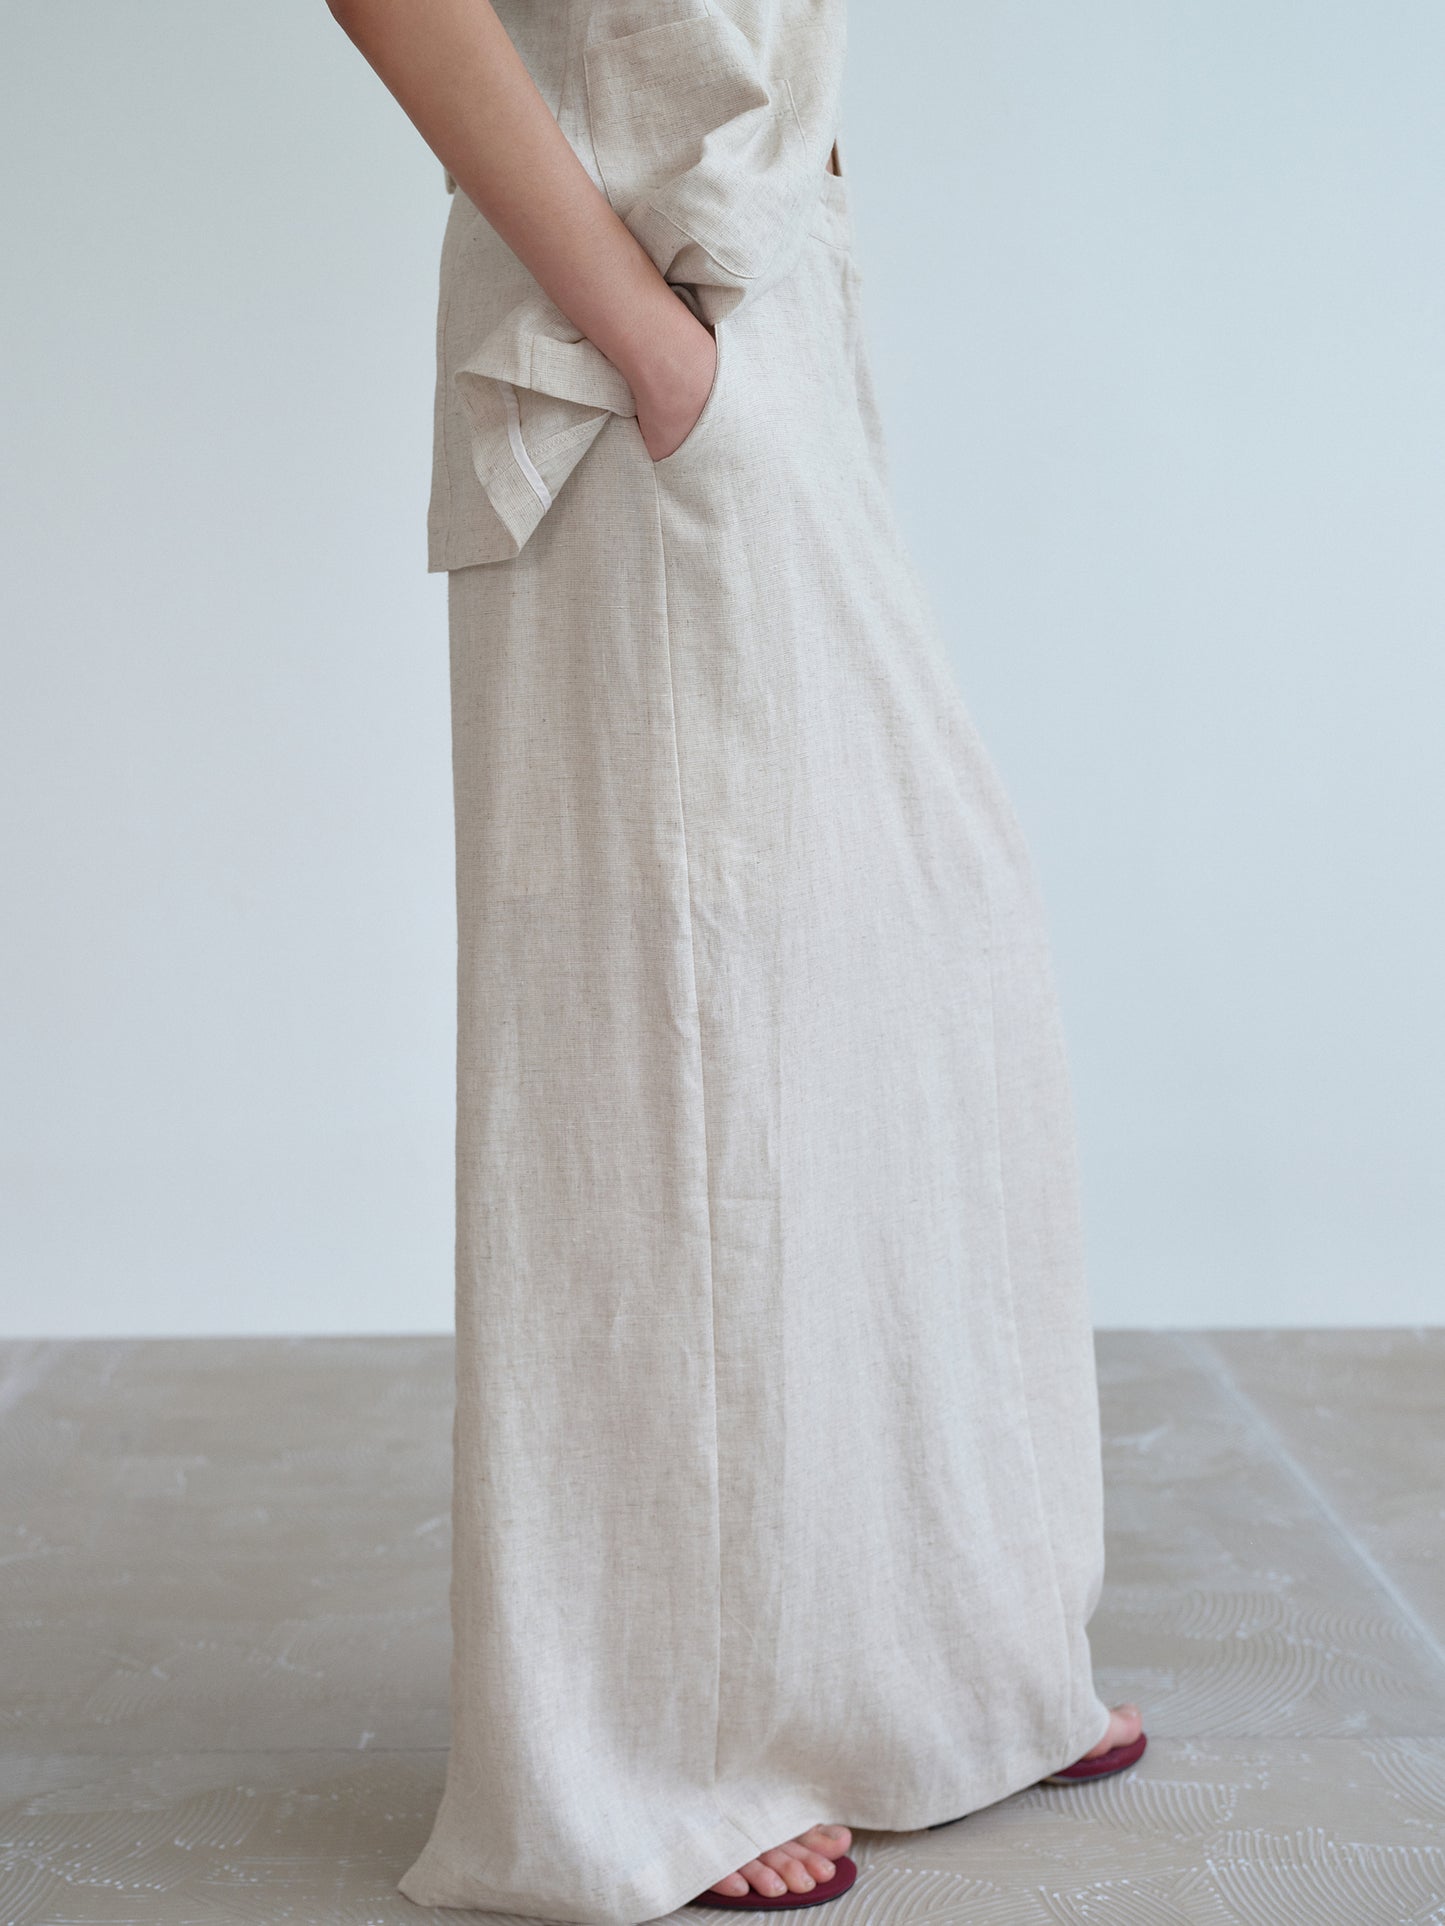 Skirt, – Oatmeal Linen Pencil SourceUnknown